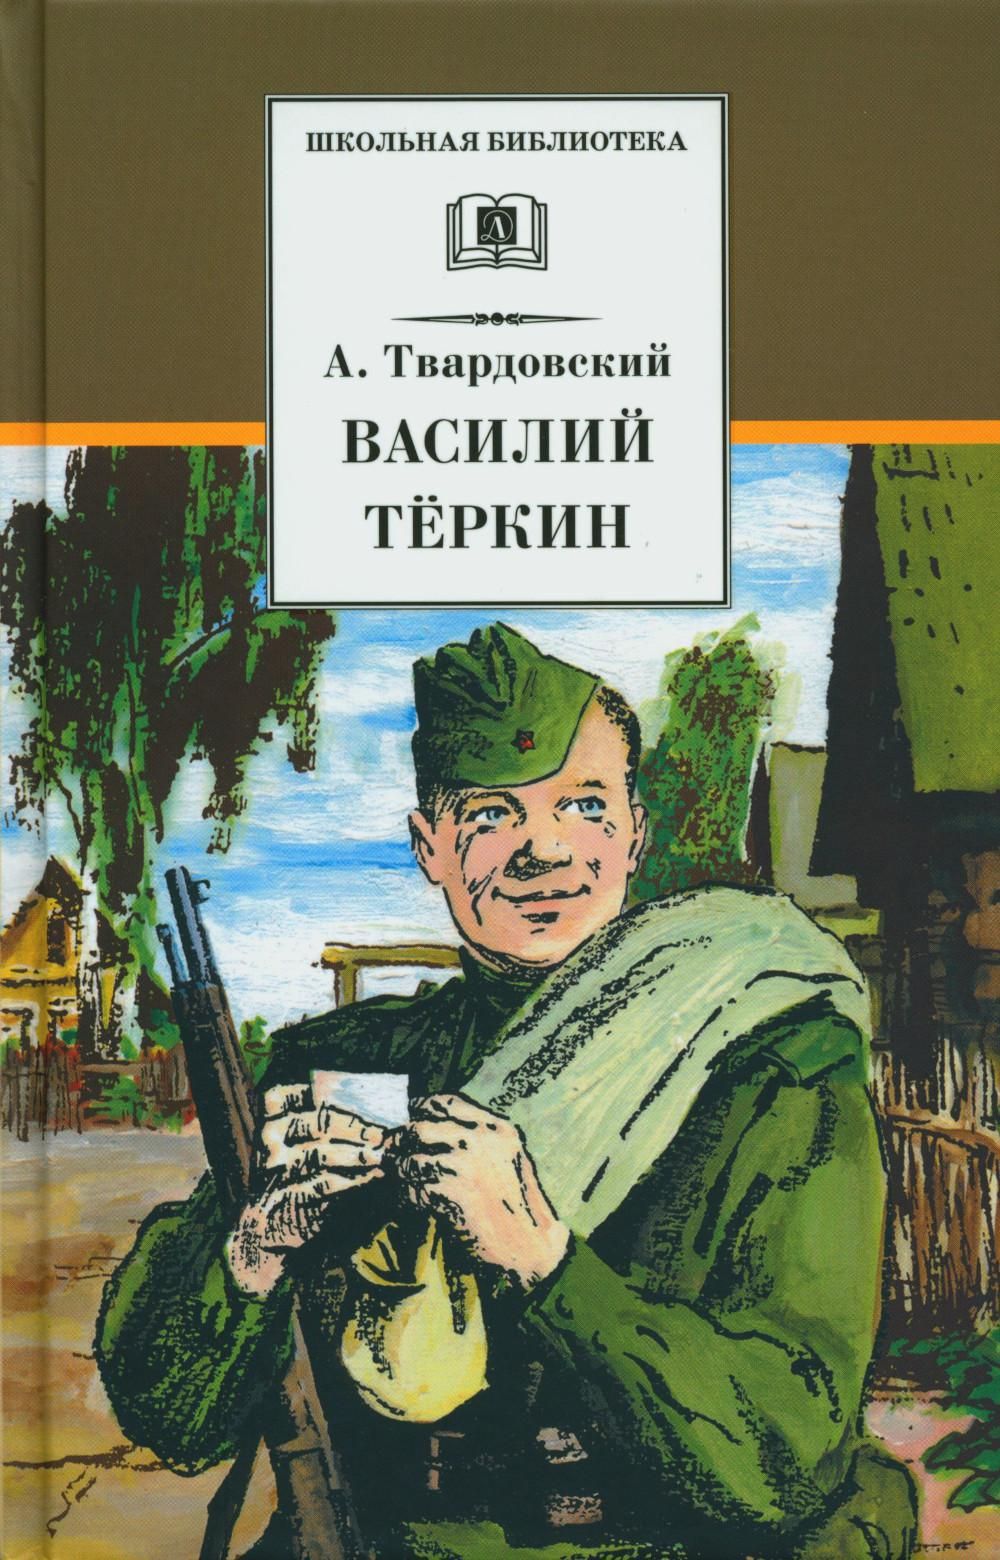 Поэма Василий Теркин